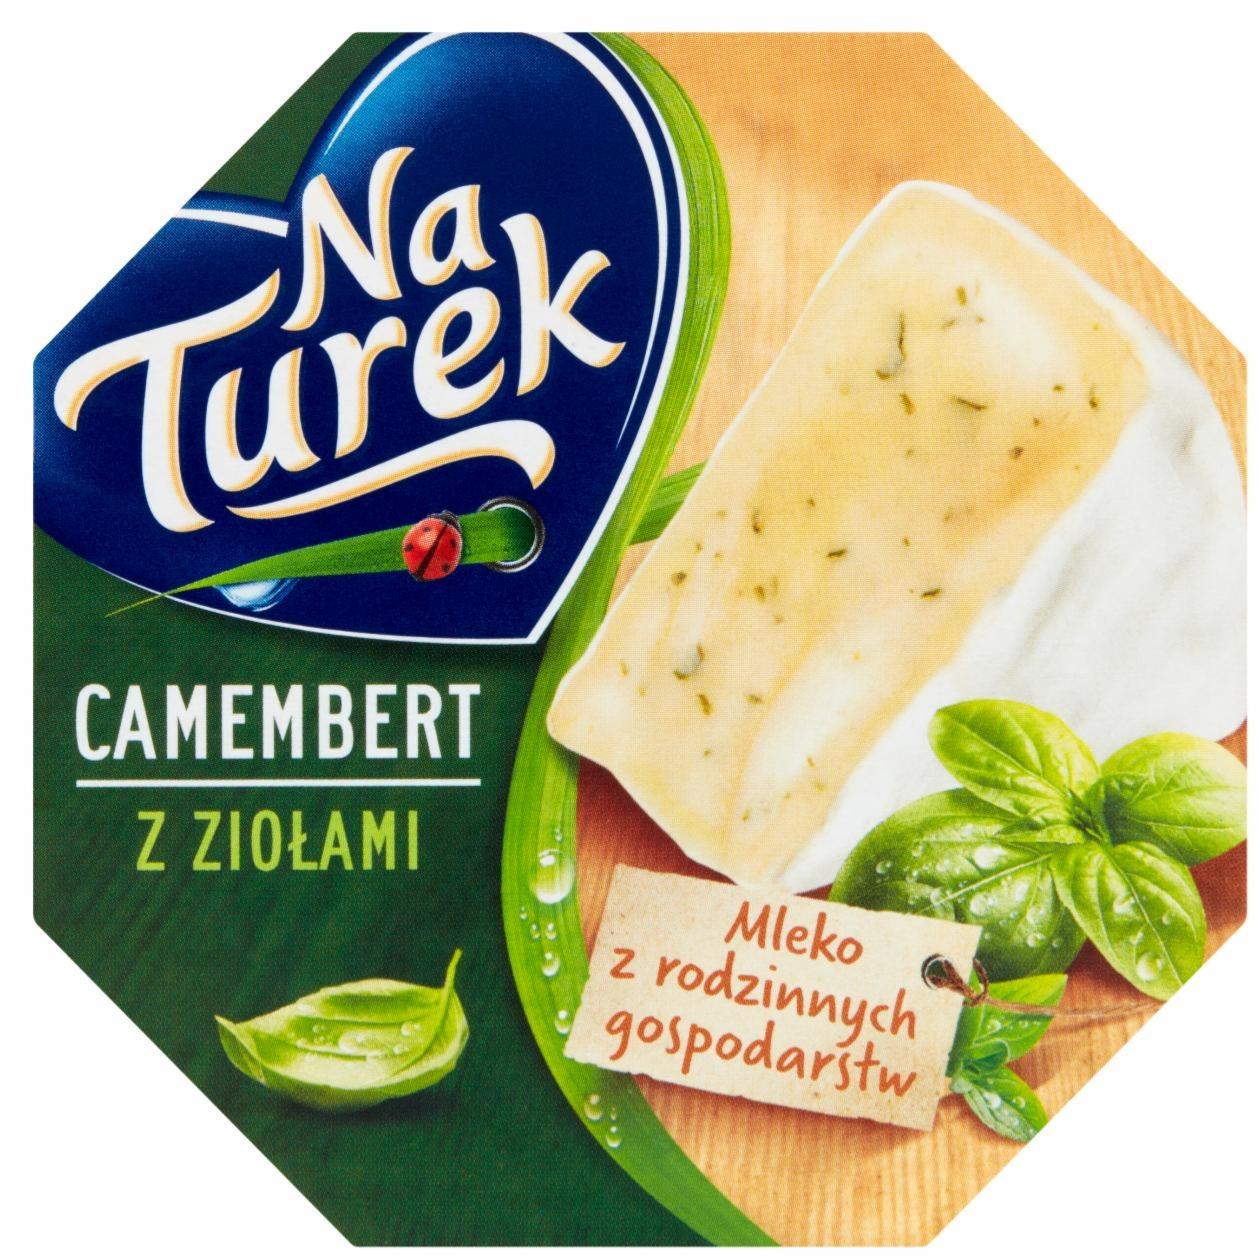 Zdjęcia - Camembert z ziołami NaTurek